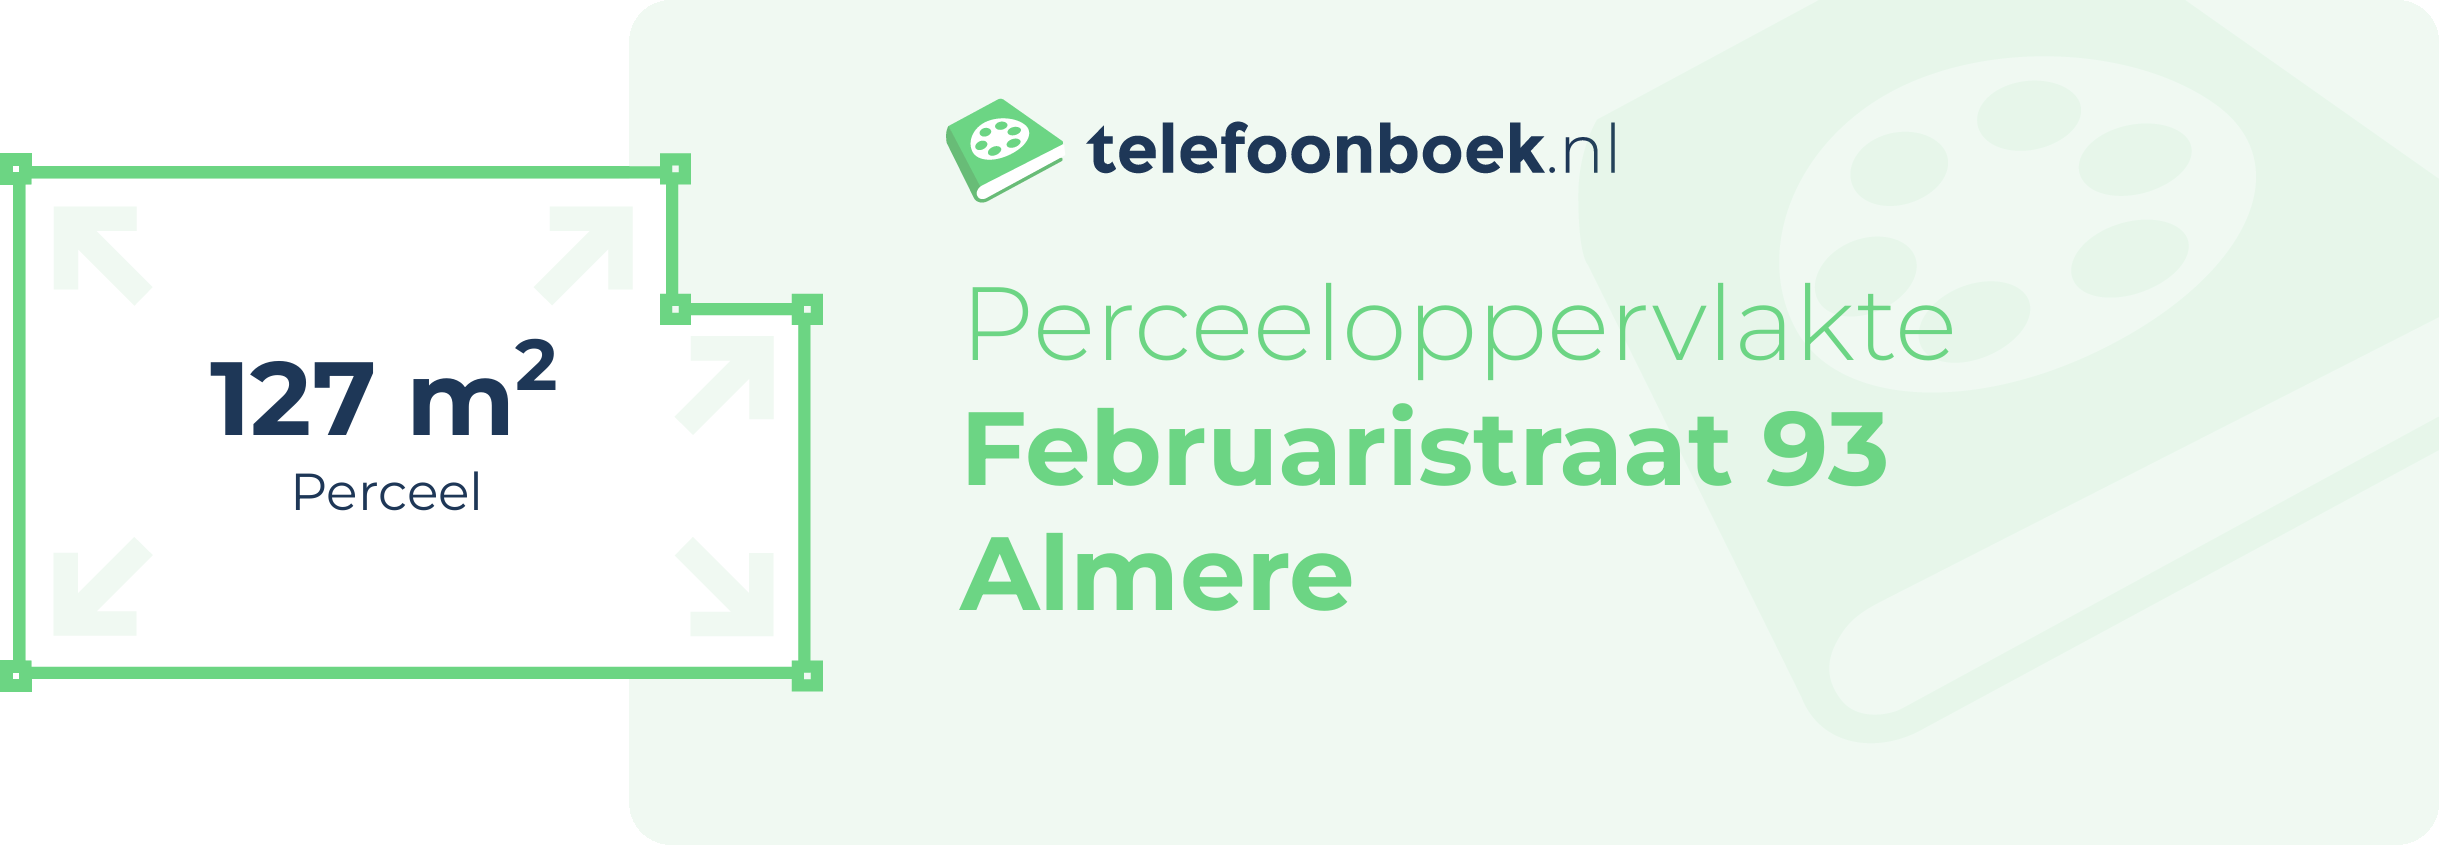 Perceeloppervlakte Februaristraat 93 Almere